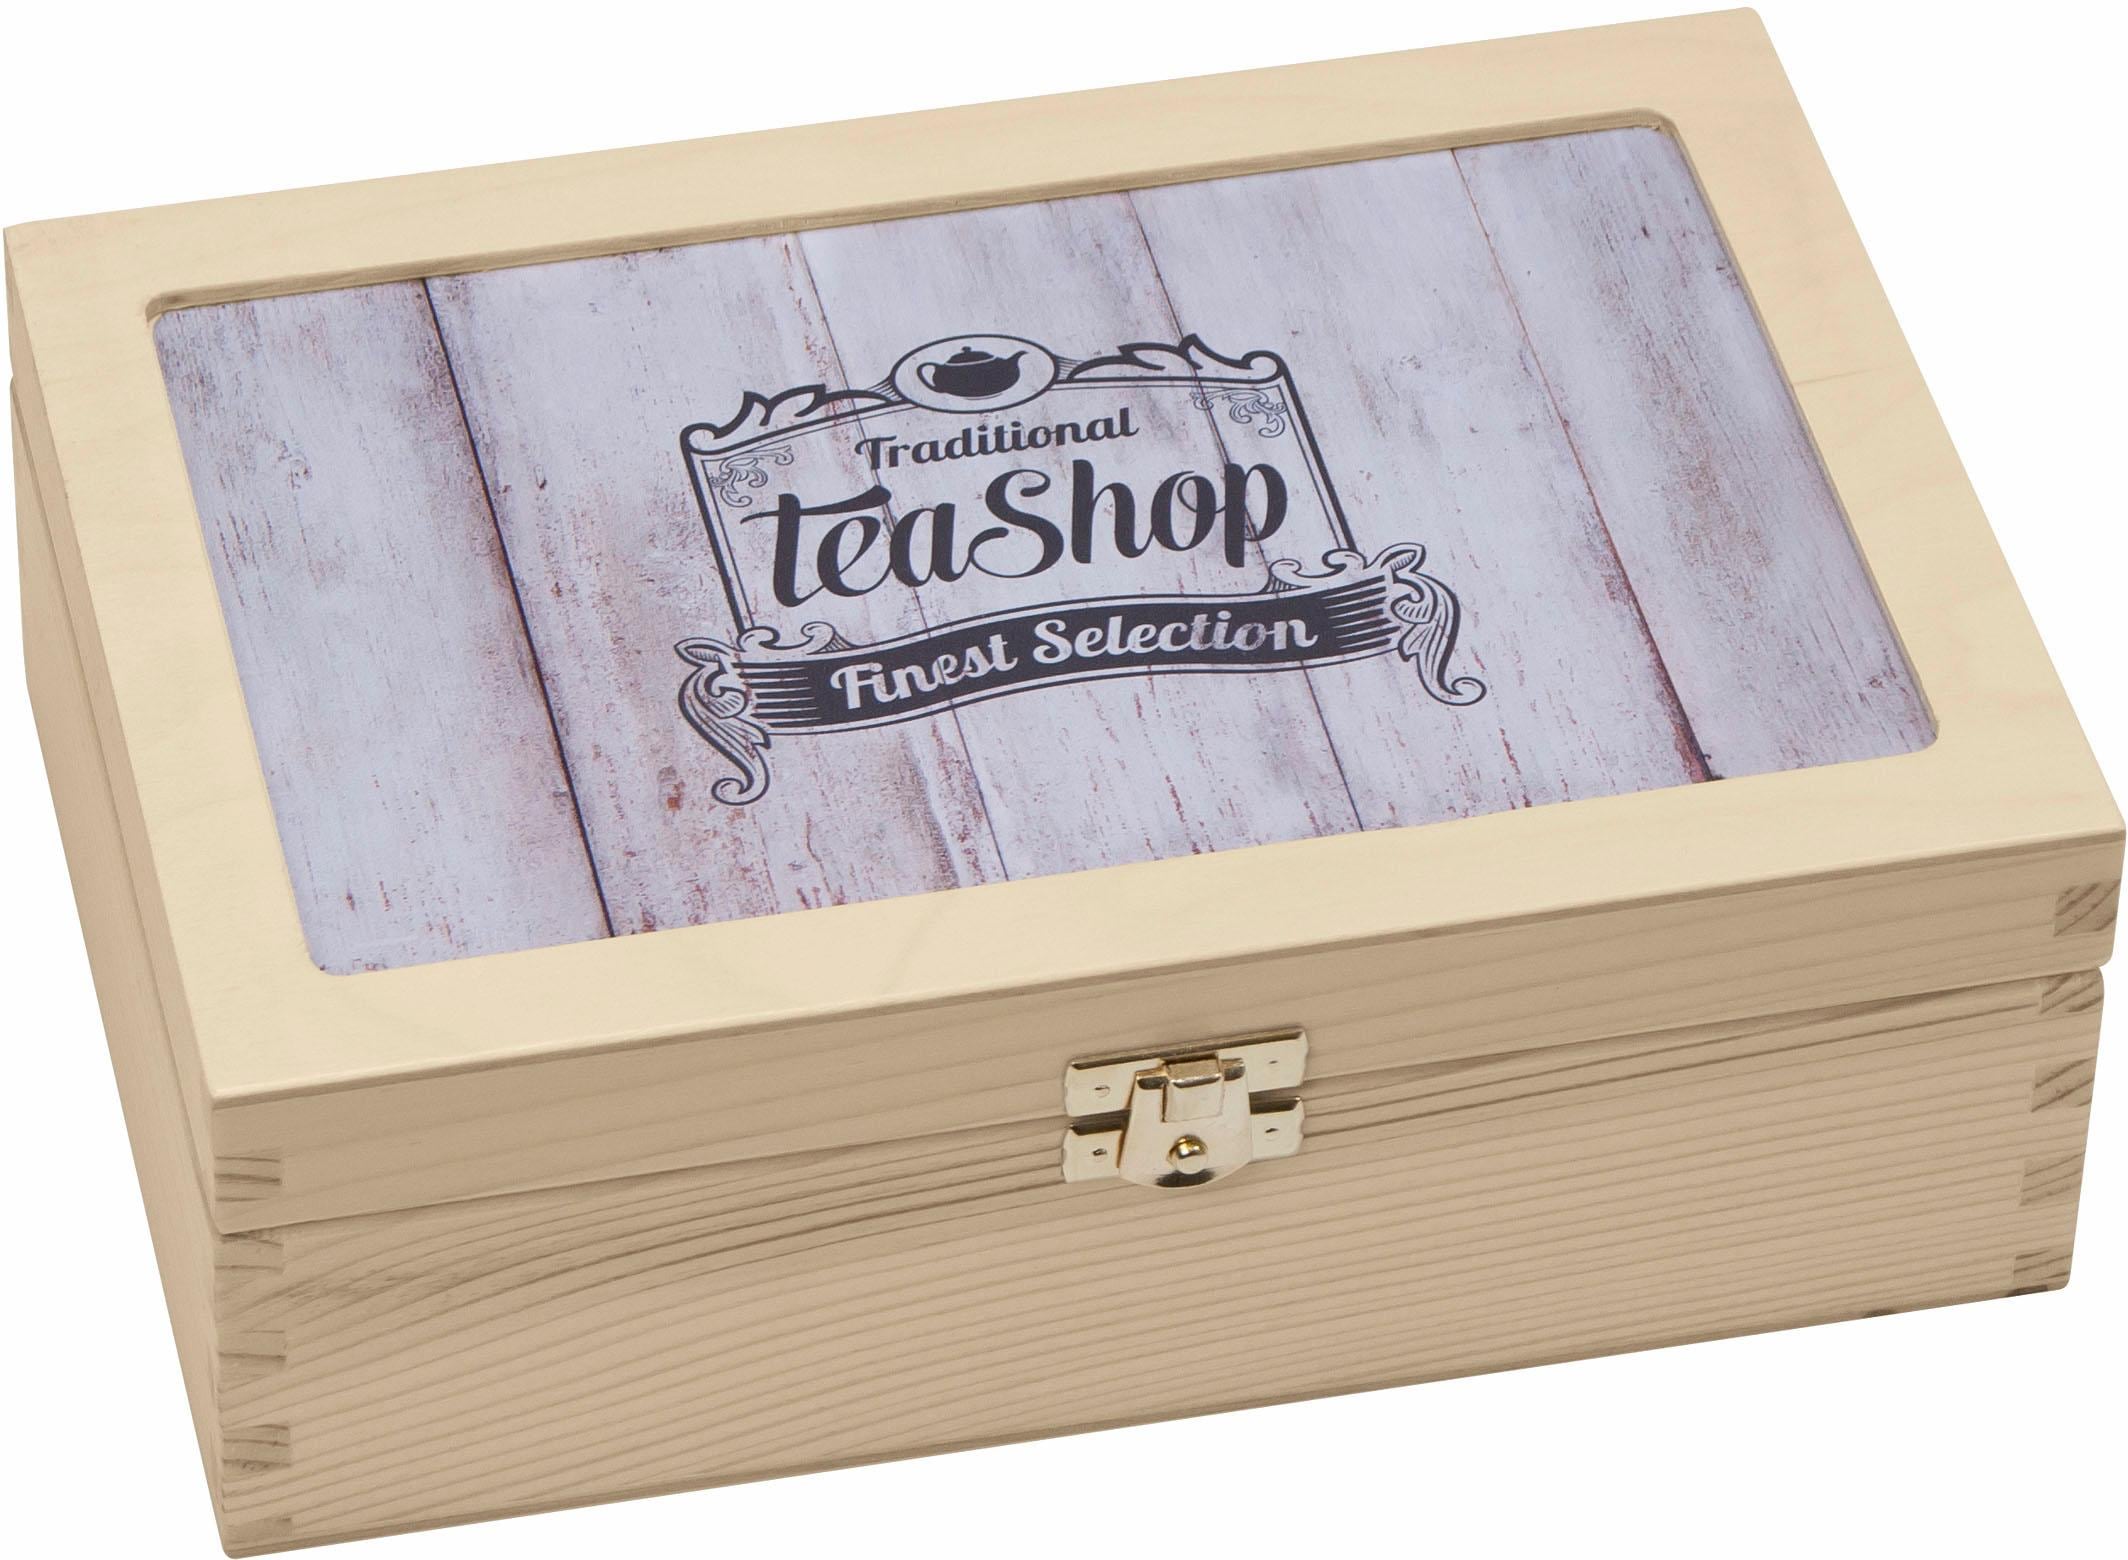 Contento Teebox »Traditional Tea-Shop Finest Selection«, (1 tlg.)